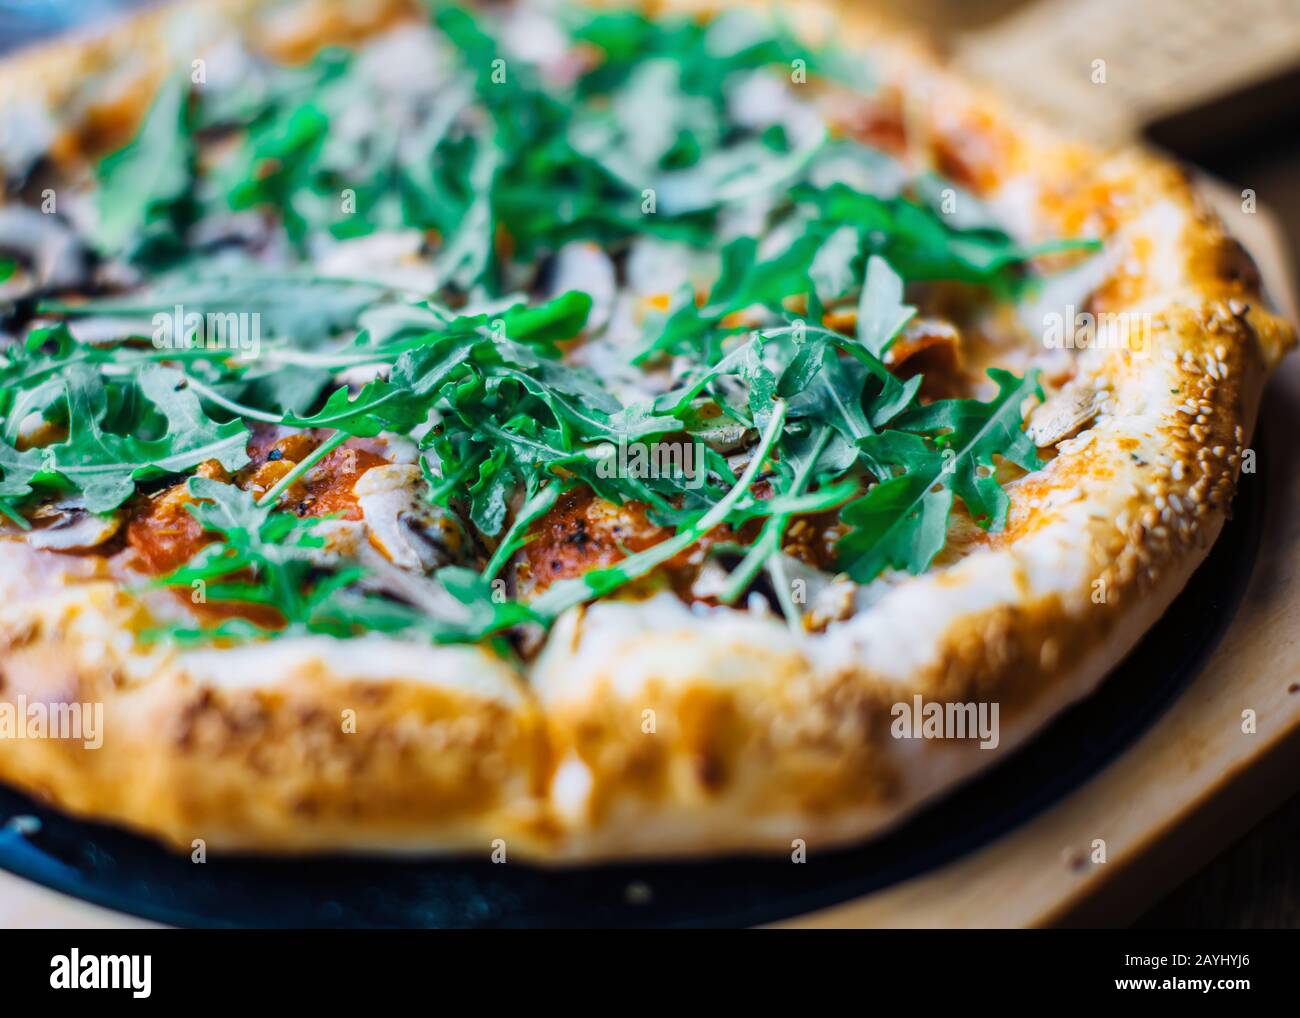 Tasty pizza on table. Italian food concept. Stock Photo